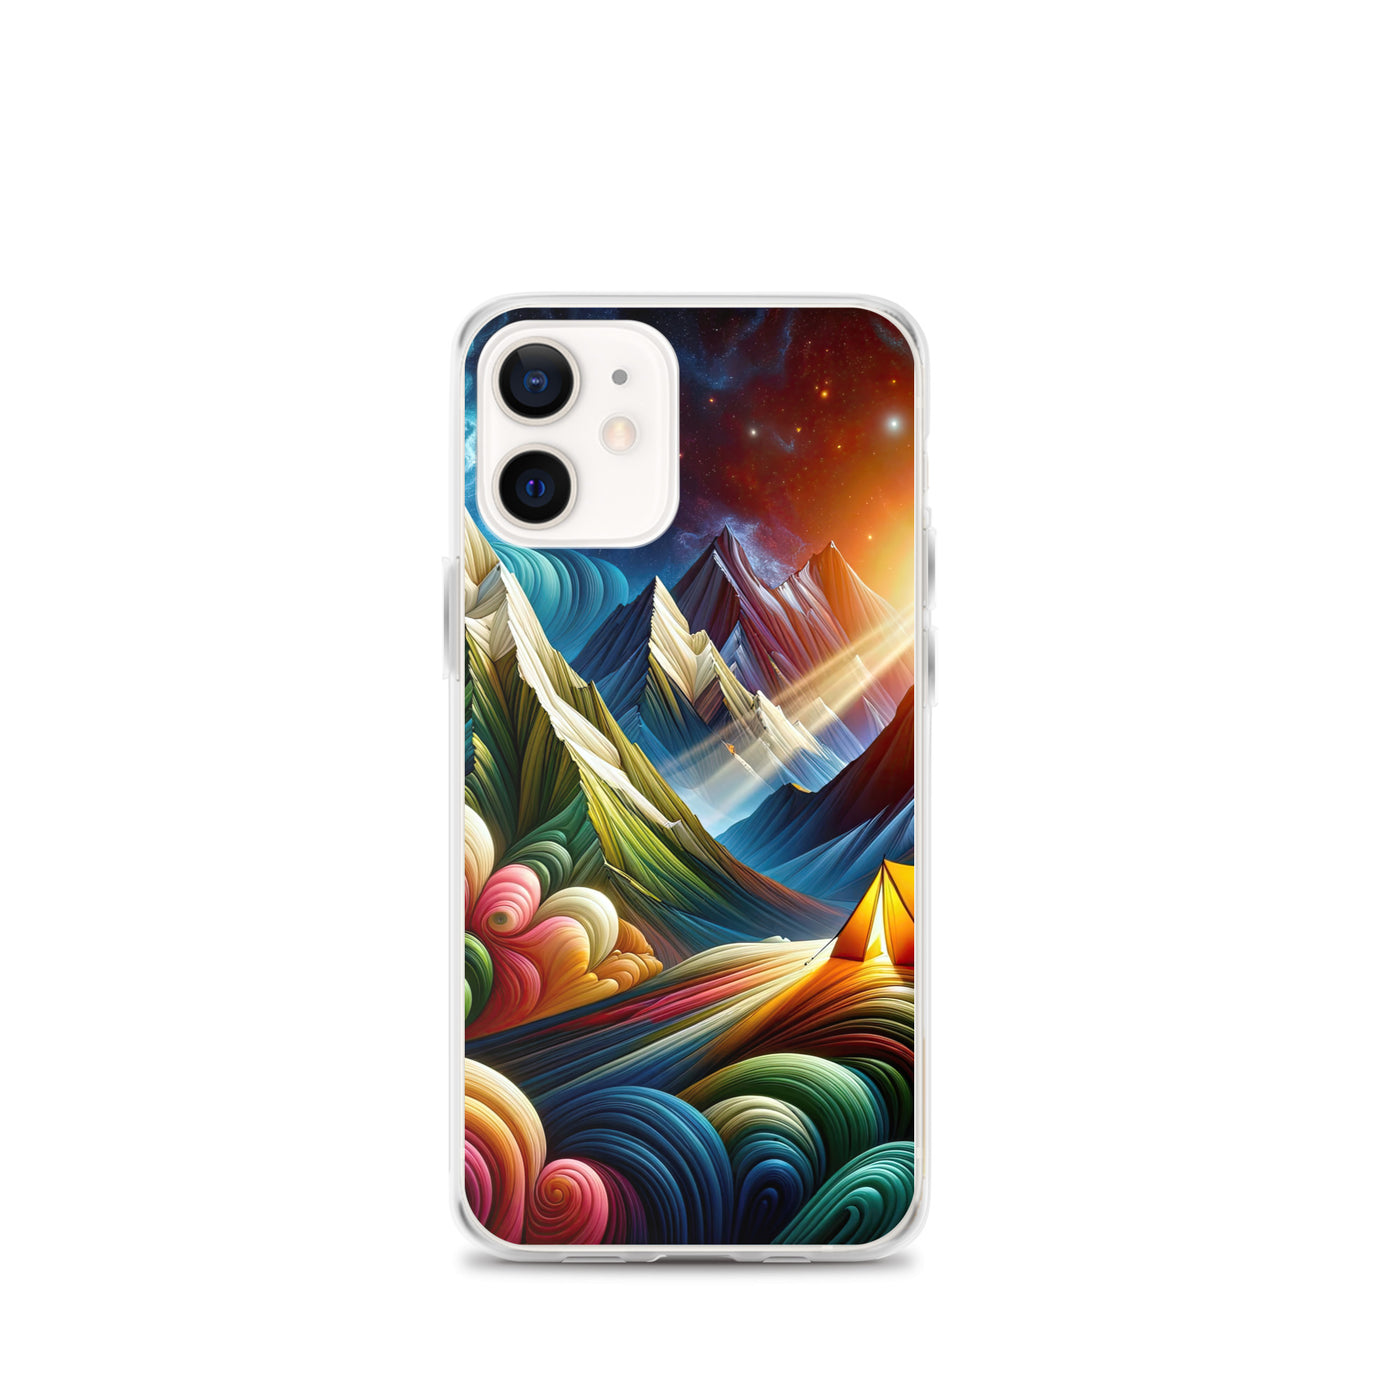 Abstrakte Bergwelt in lebendigen Farben mit Zelt - iPhone Schutzhülle (durchsichtig) camping xxx yyy zzz iPhone 12 mini